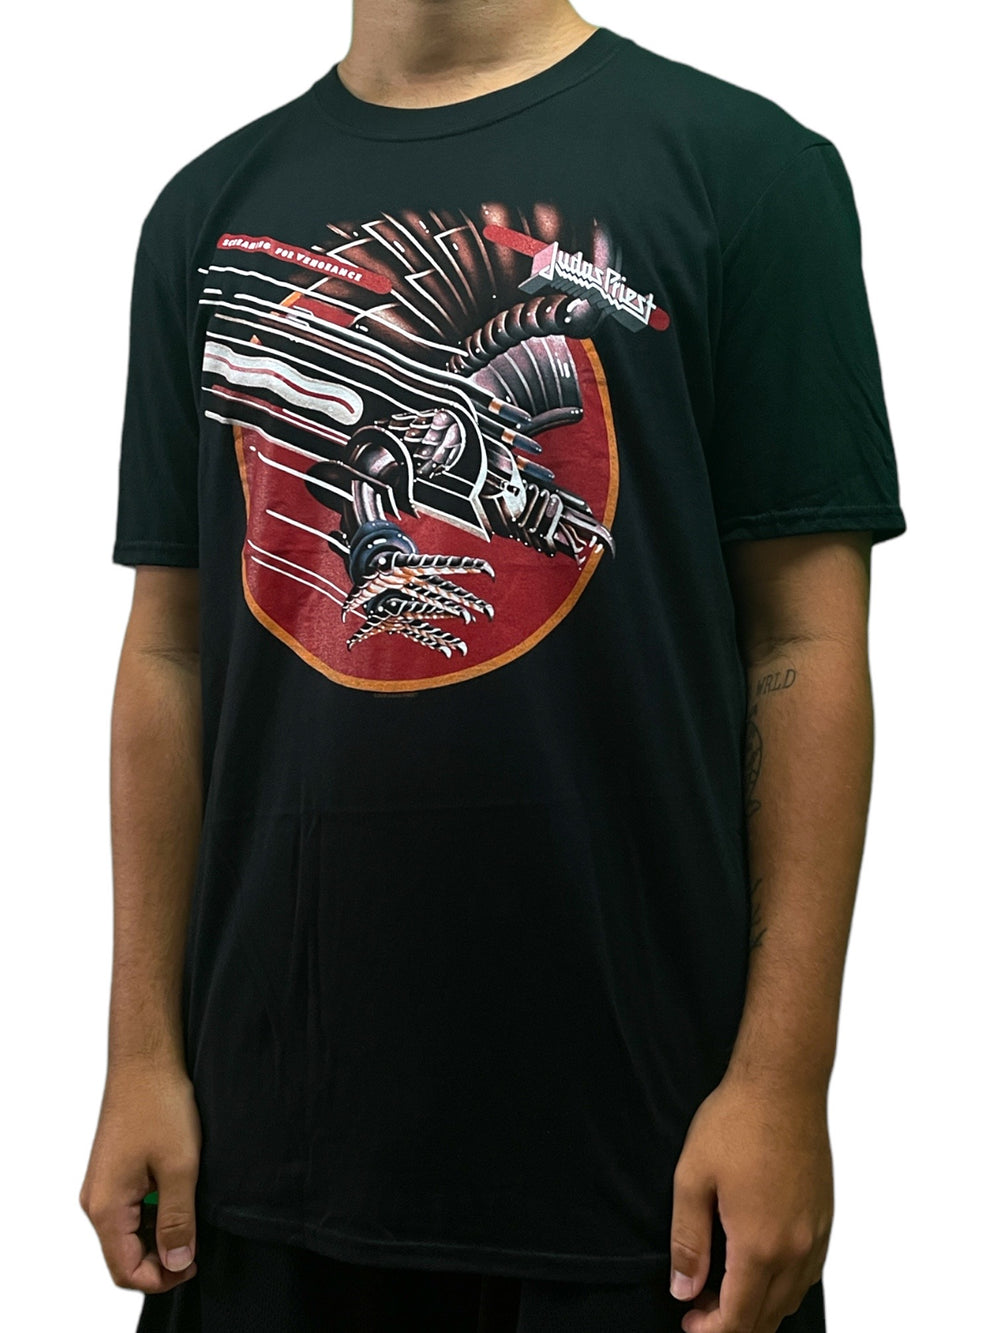 Judas Priest  Screaming Vengeance Unisex Official T Shirt Brand New Various Sizes